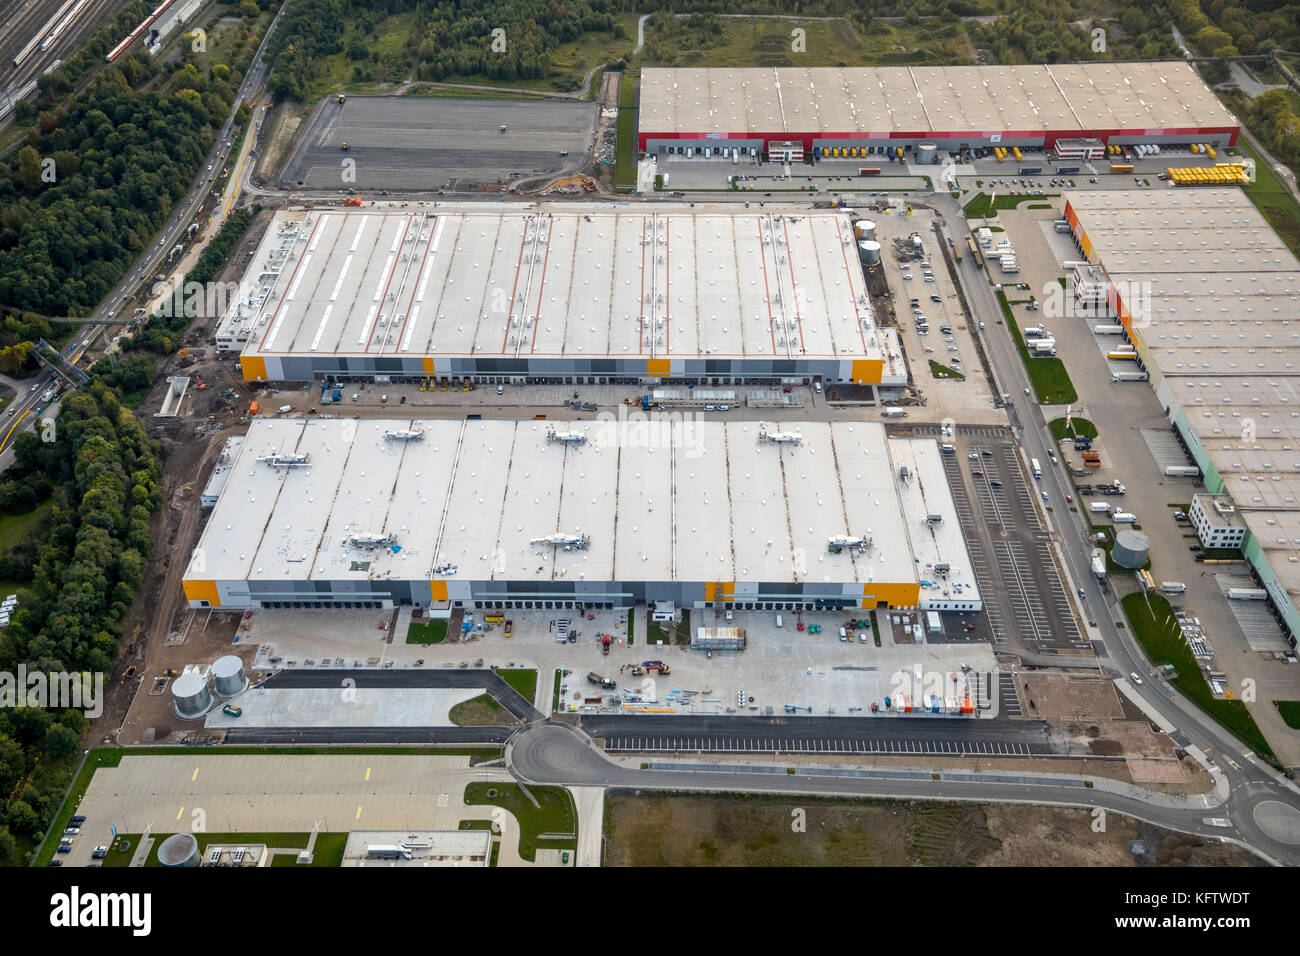 Amazon logistics center 